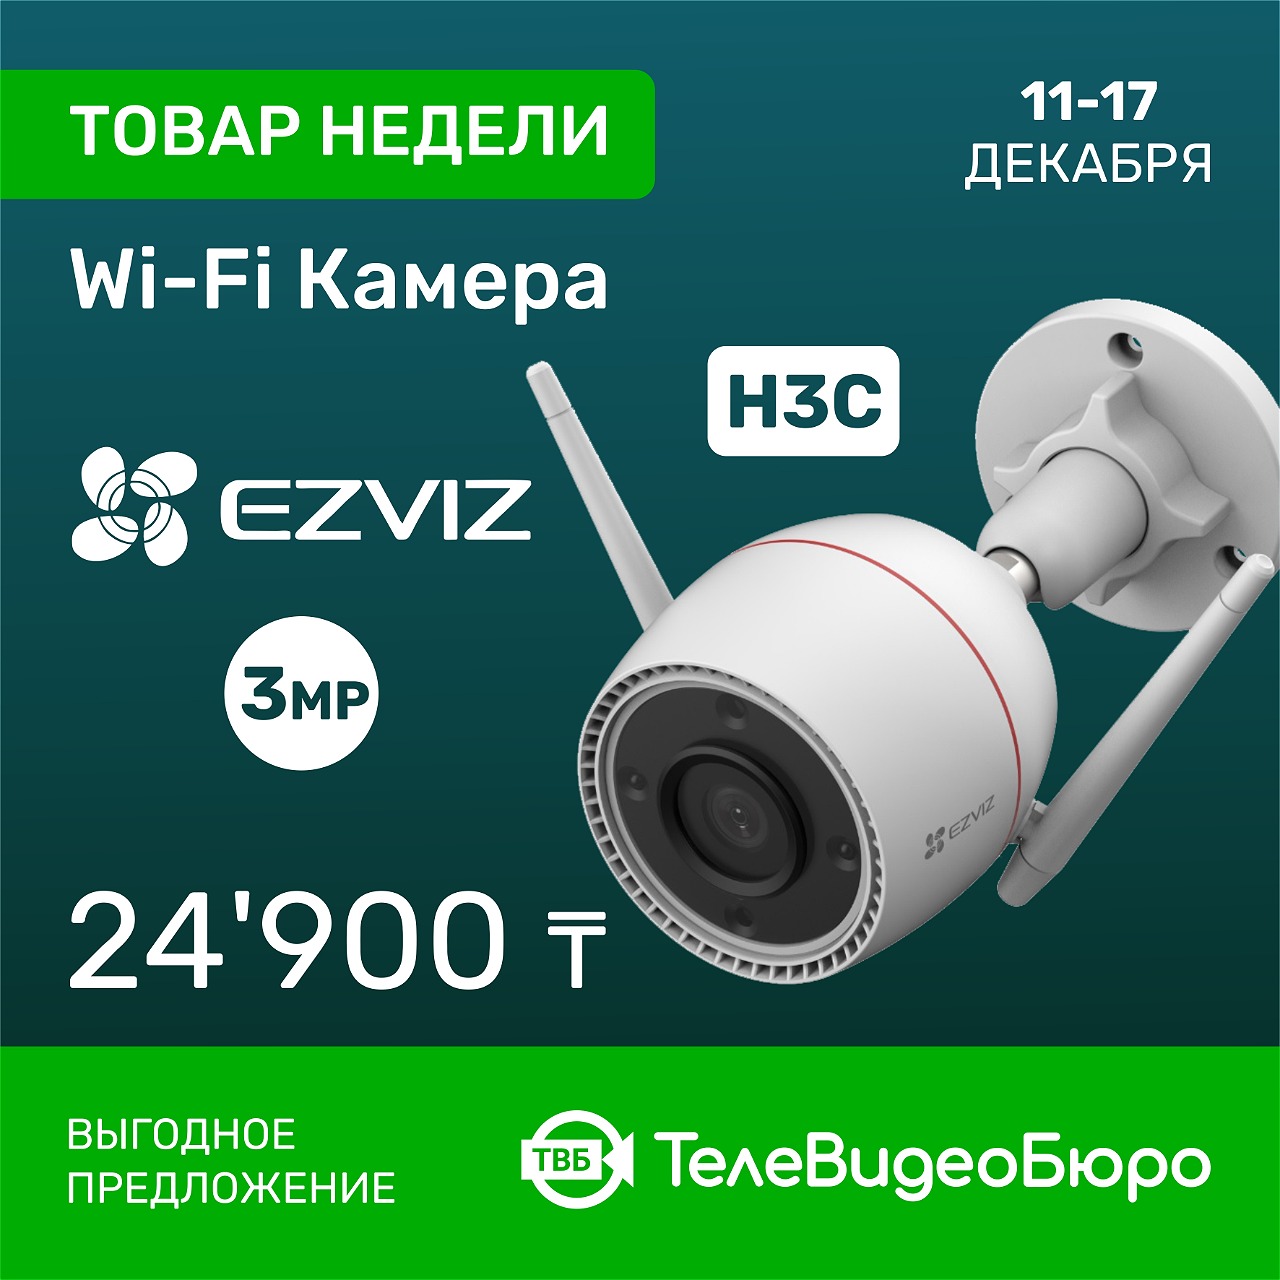 Товар Недели в Магазине Систем Безопасности «ТелеВидеоБюро» – WiFi<br>Камера Ezviz H3C 3MP (CS-H3C-R100-1K3WKFL)!